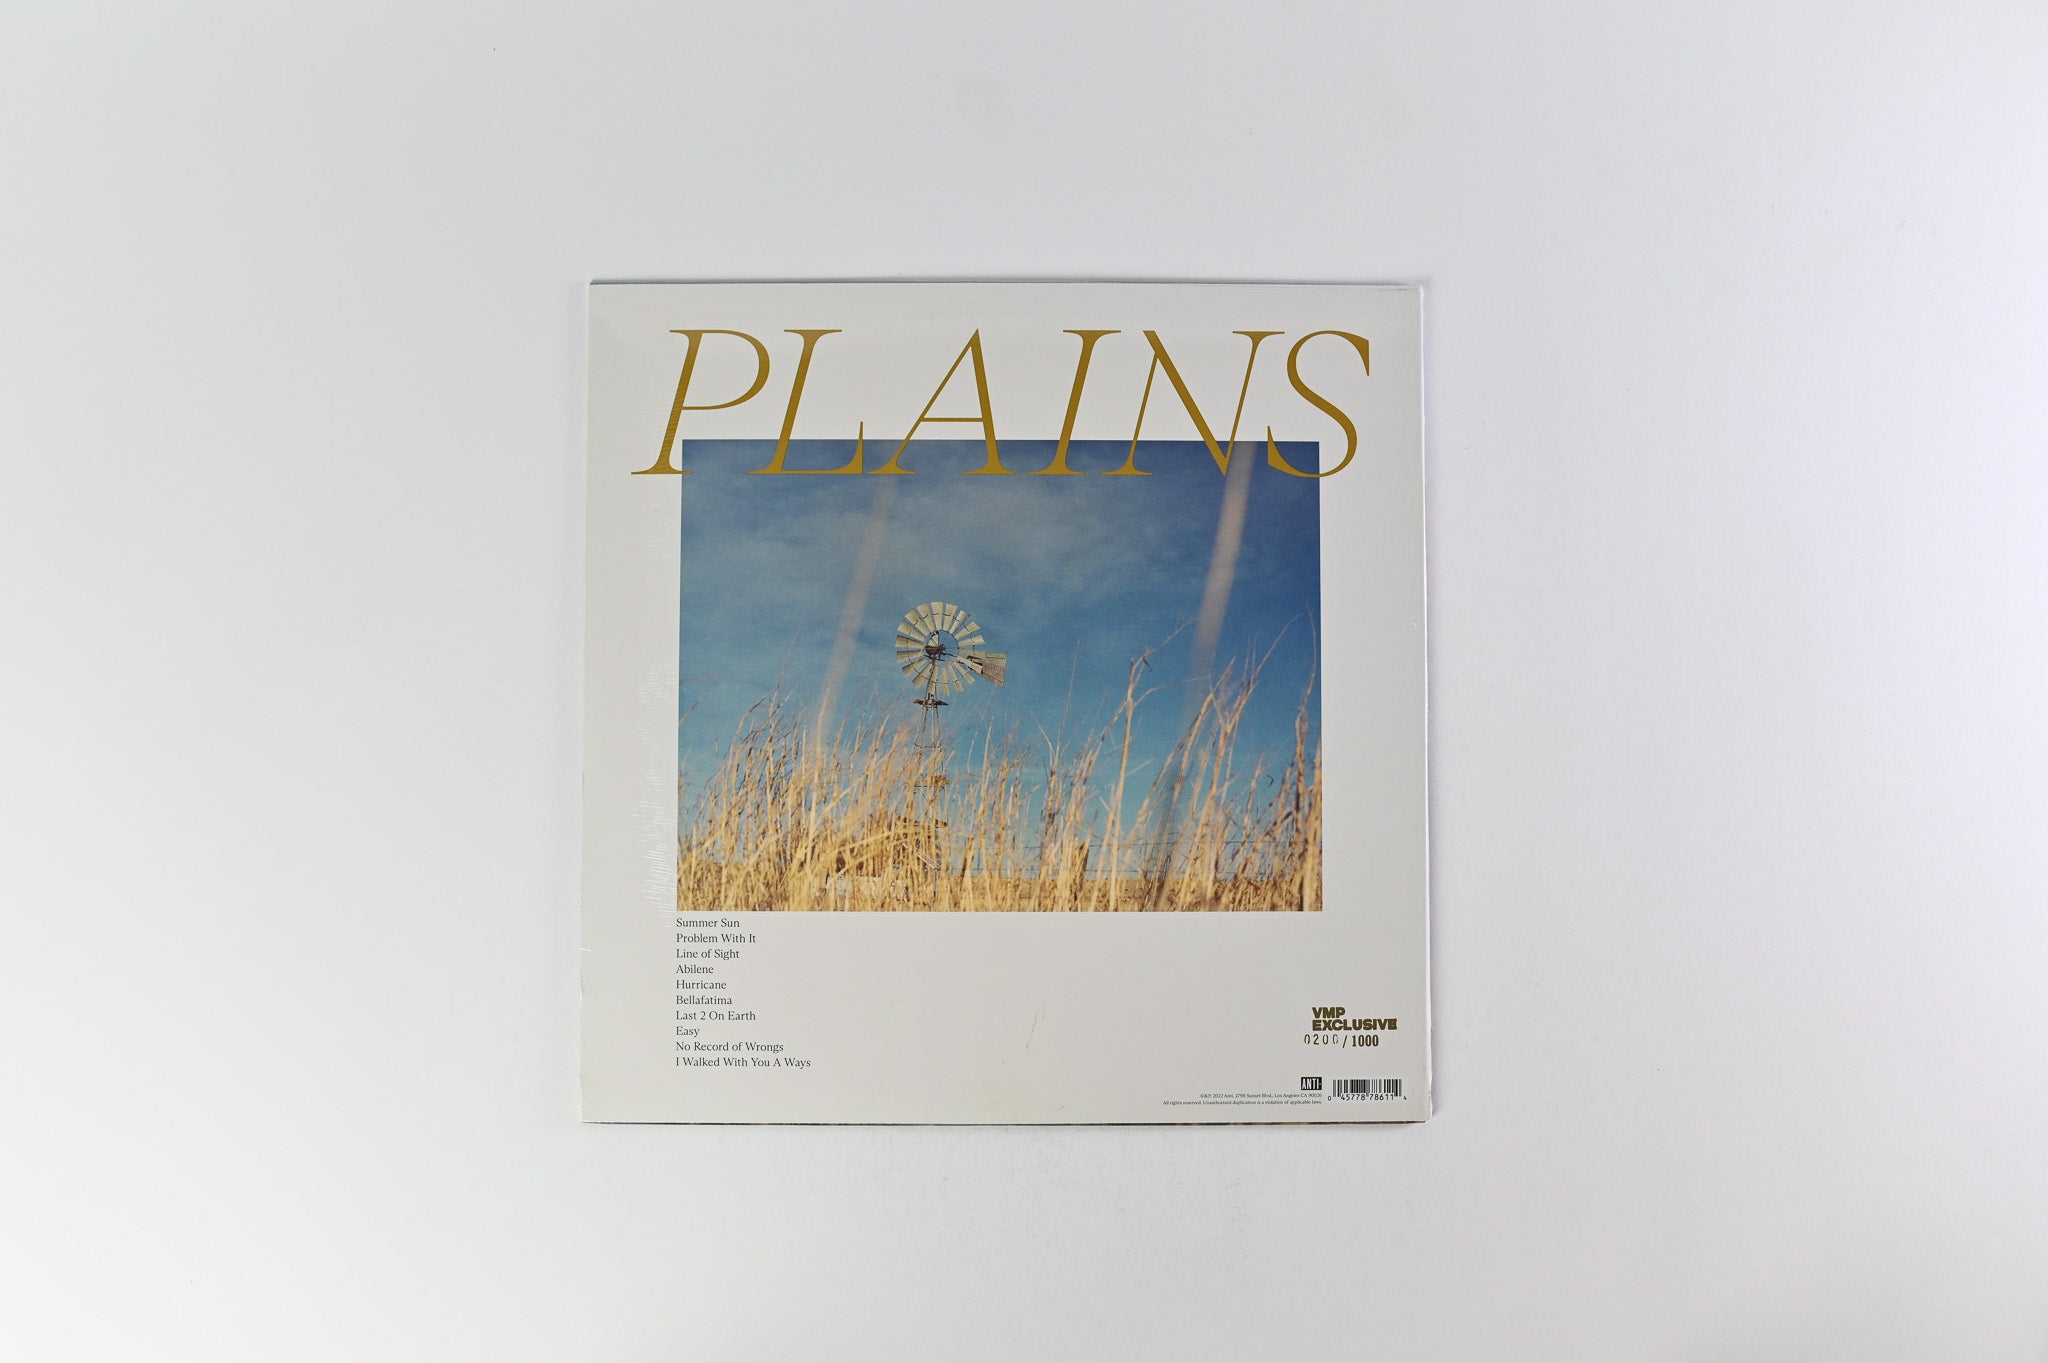 Plains - I Walked With You A Ways Vinyl Me Please Ltd Numbered Coke Bottle Clear Vinyl Sealed